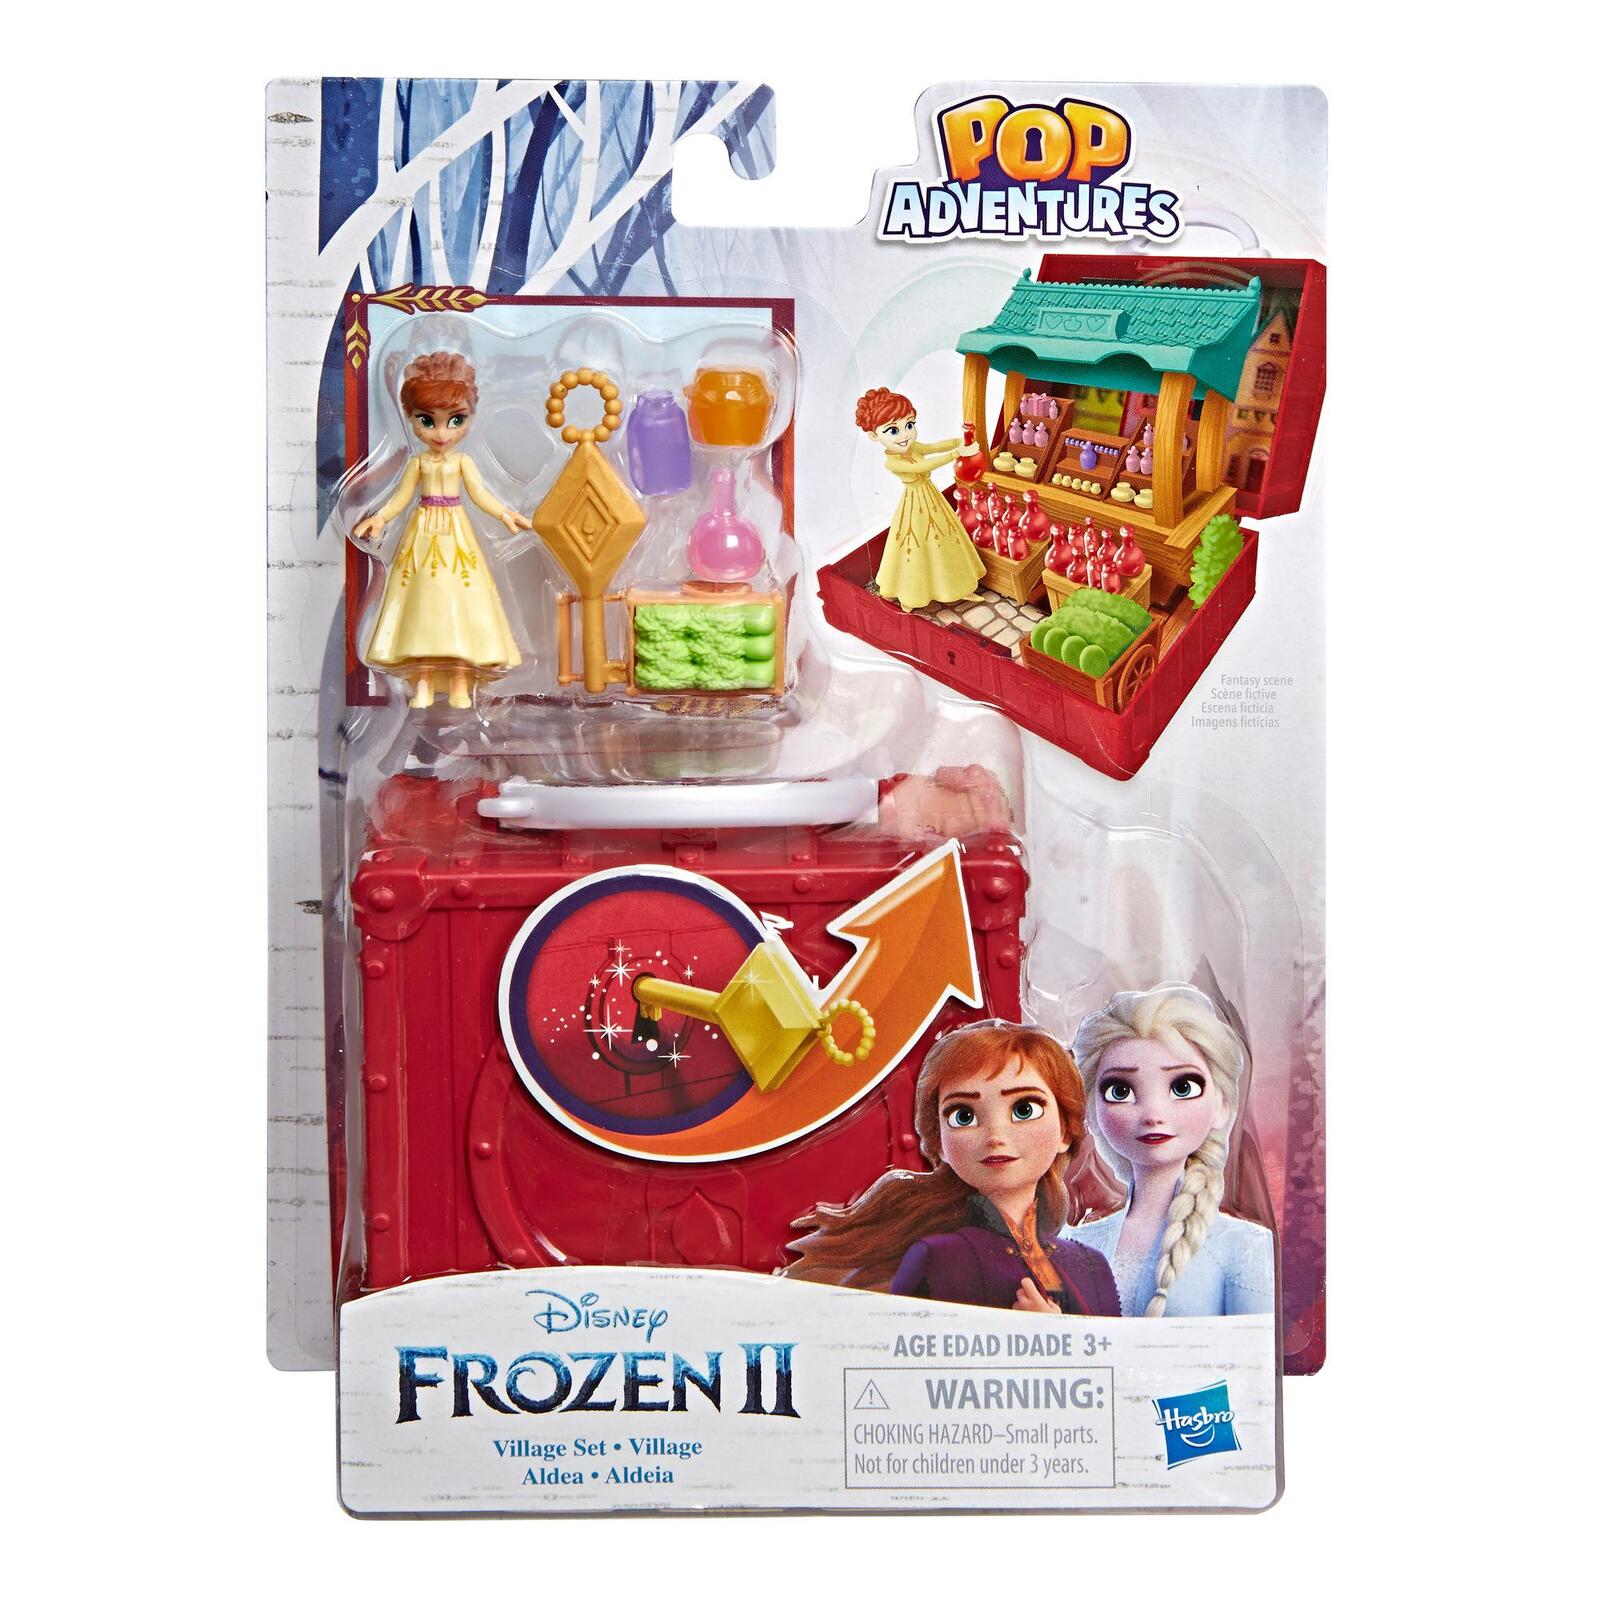 Disney Frozen Pop-Up Adventures Village Playset